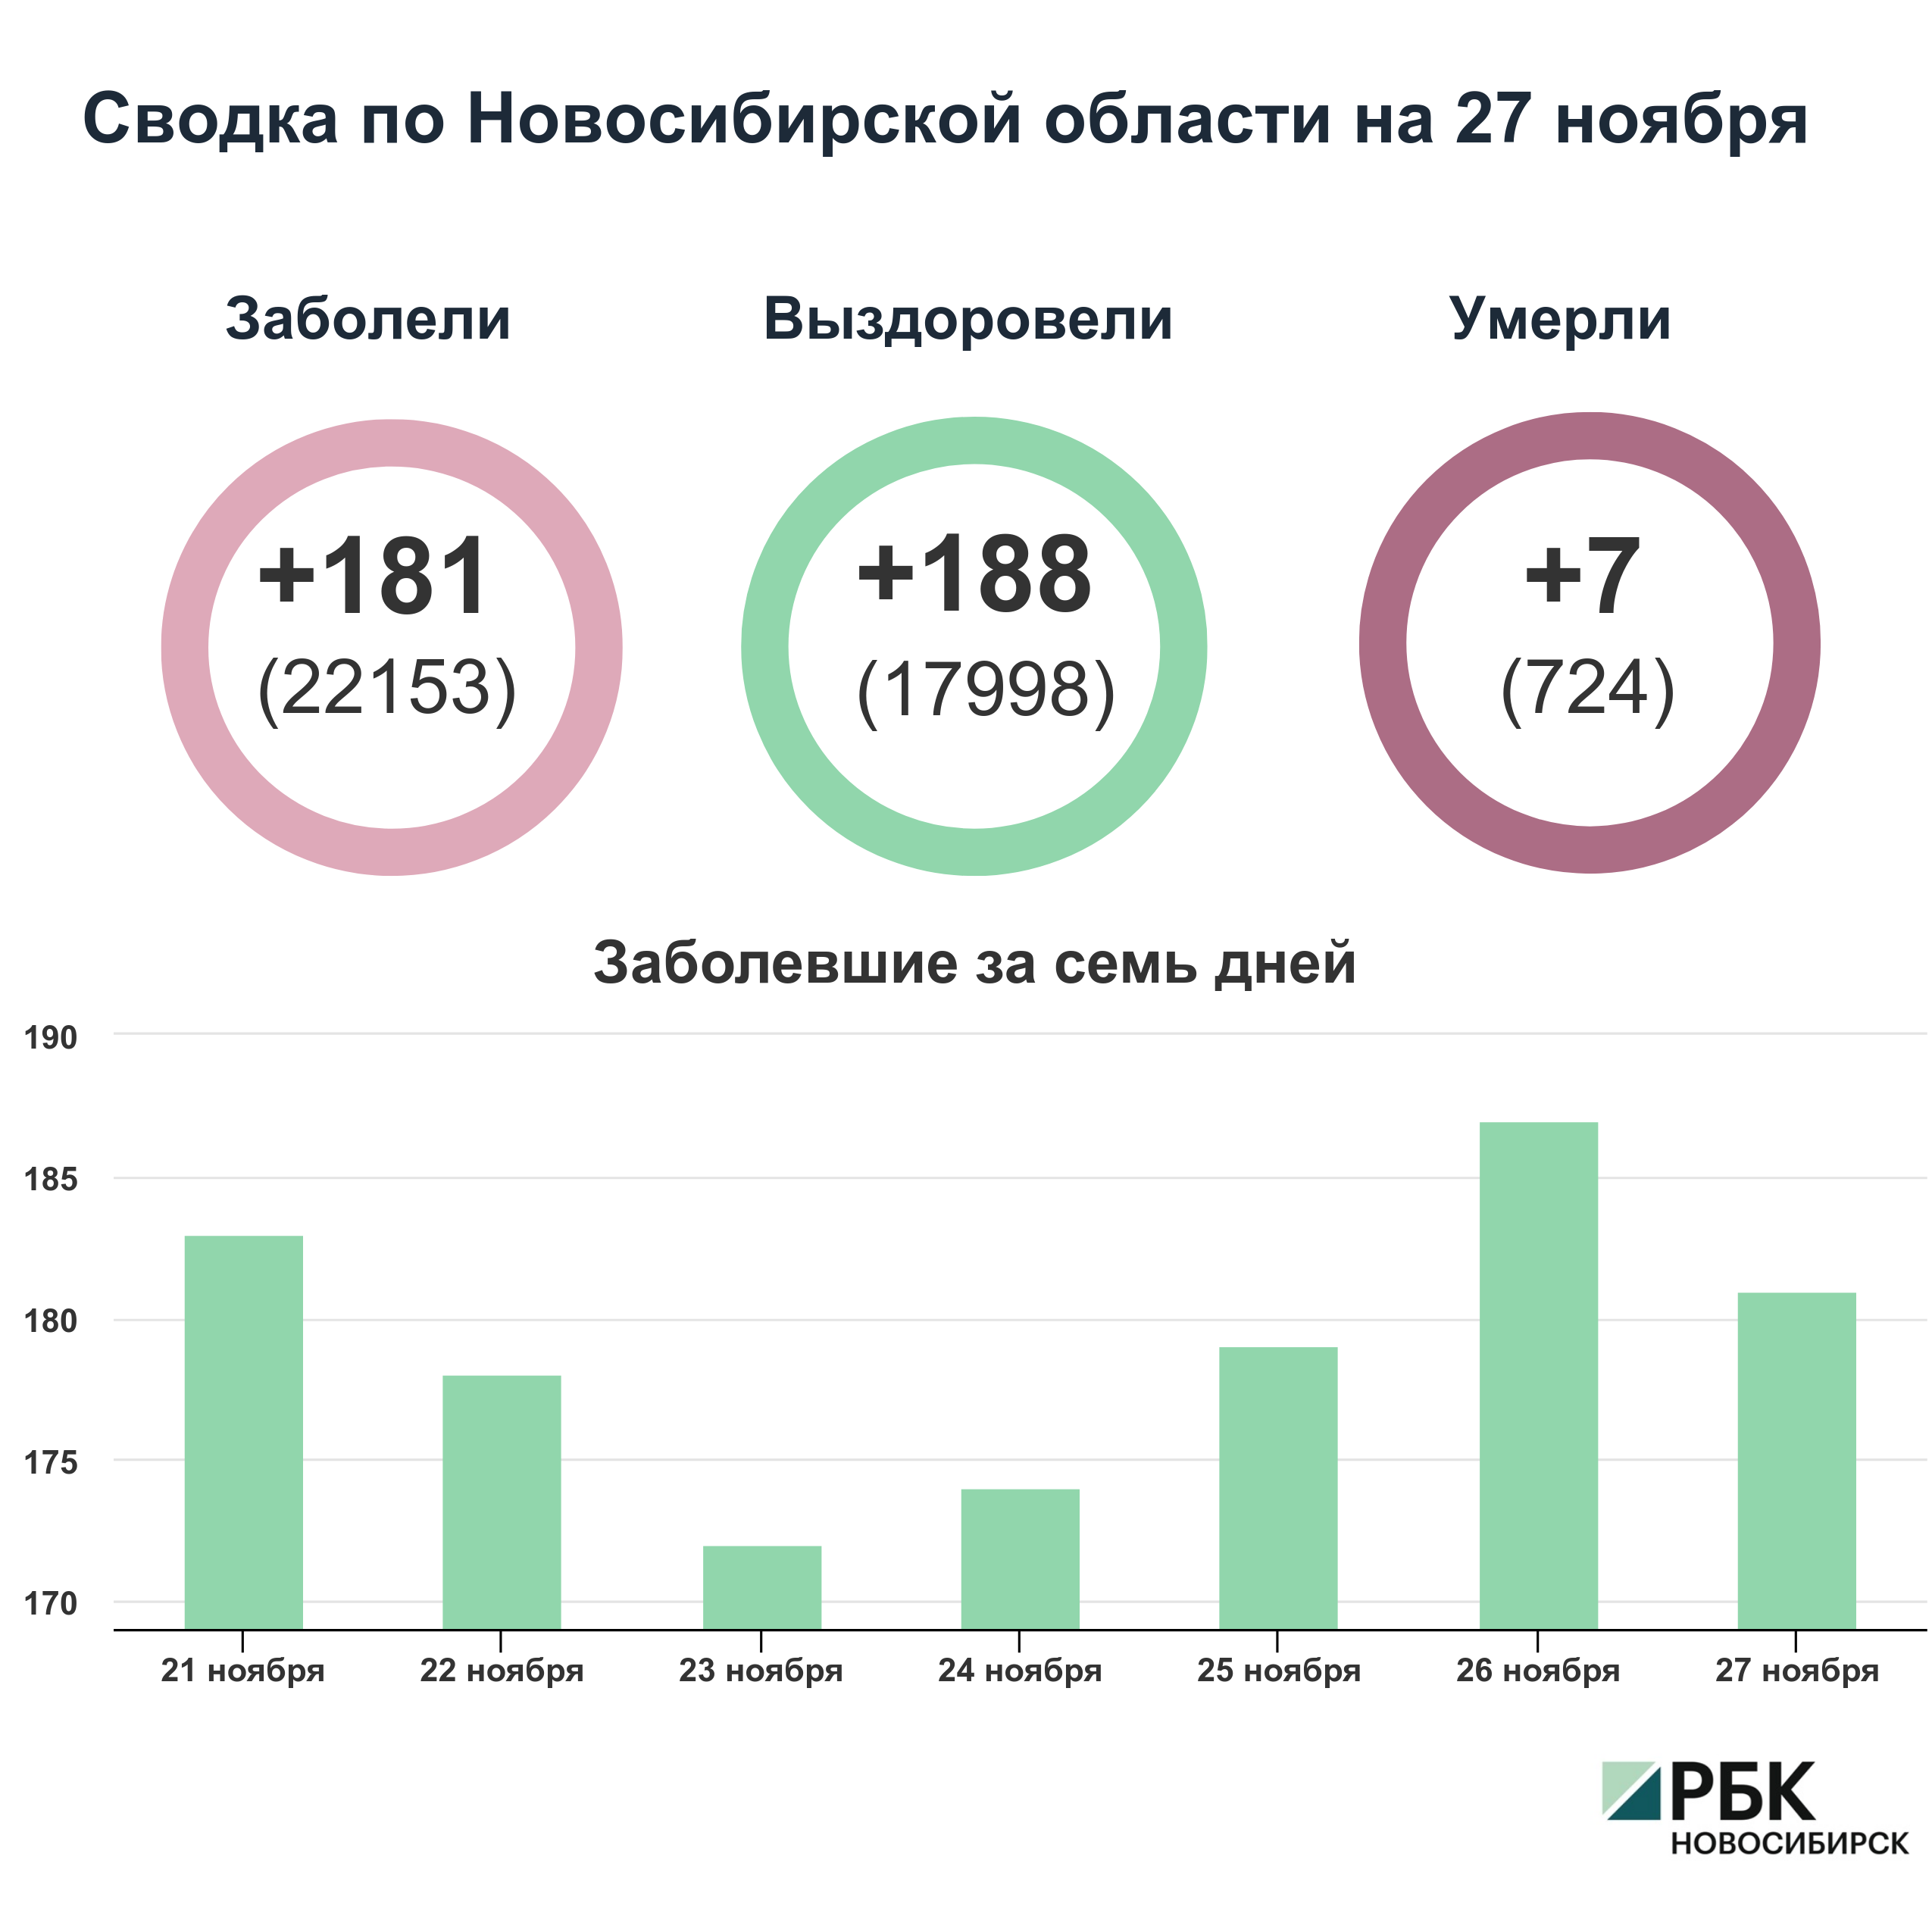 Коронавирус в Новосибирске: сводка на 27 ноября